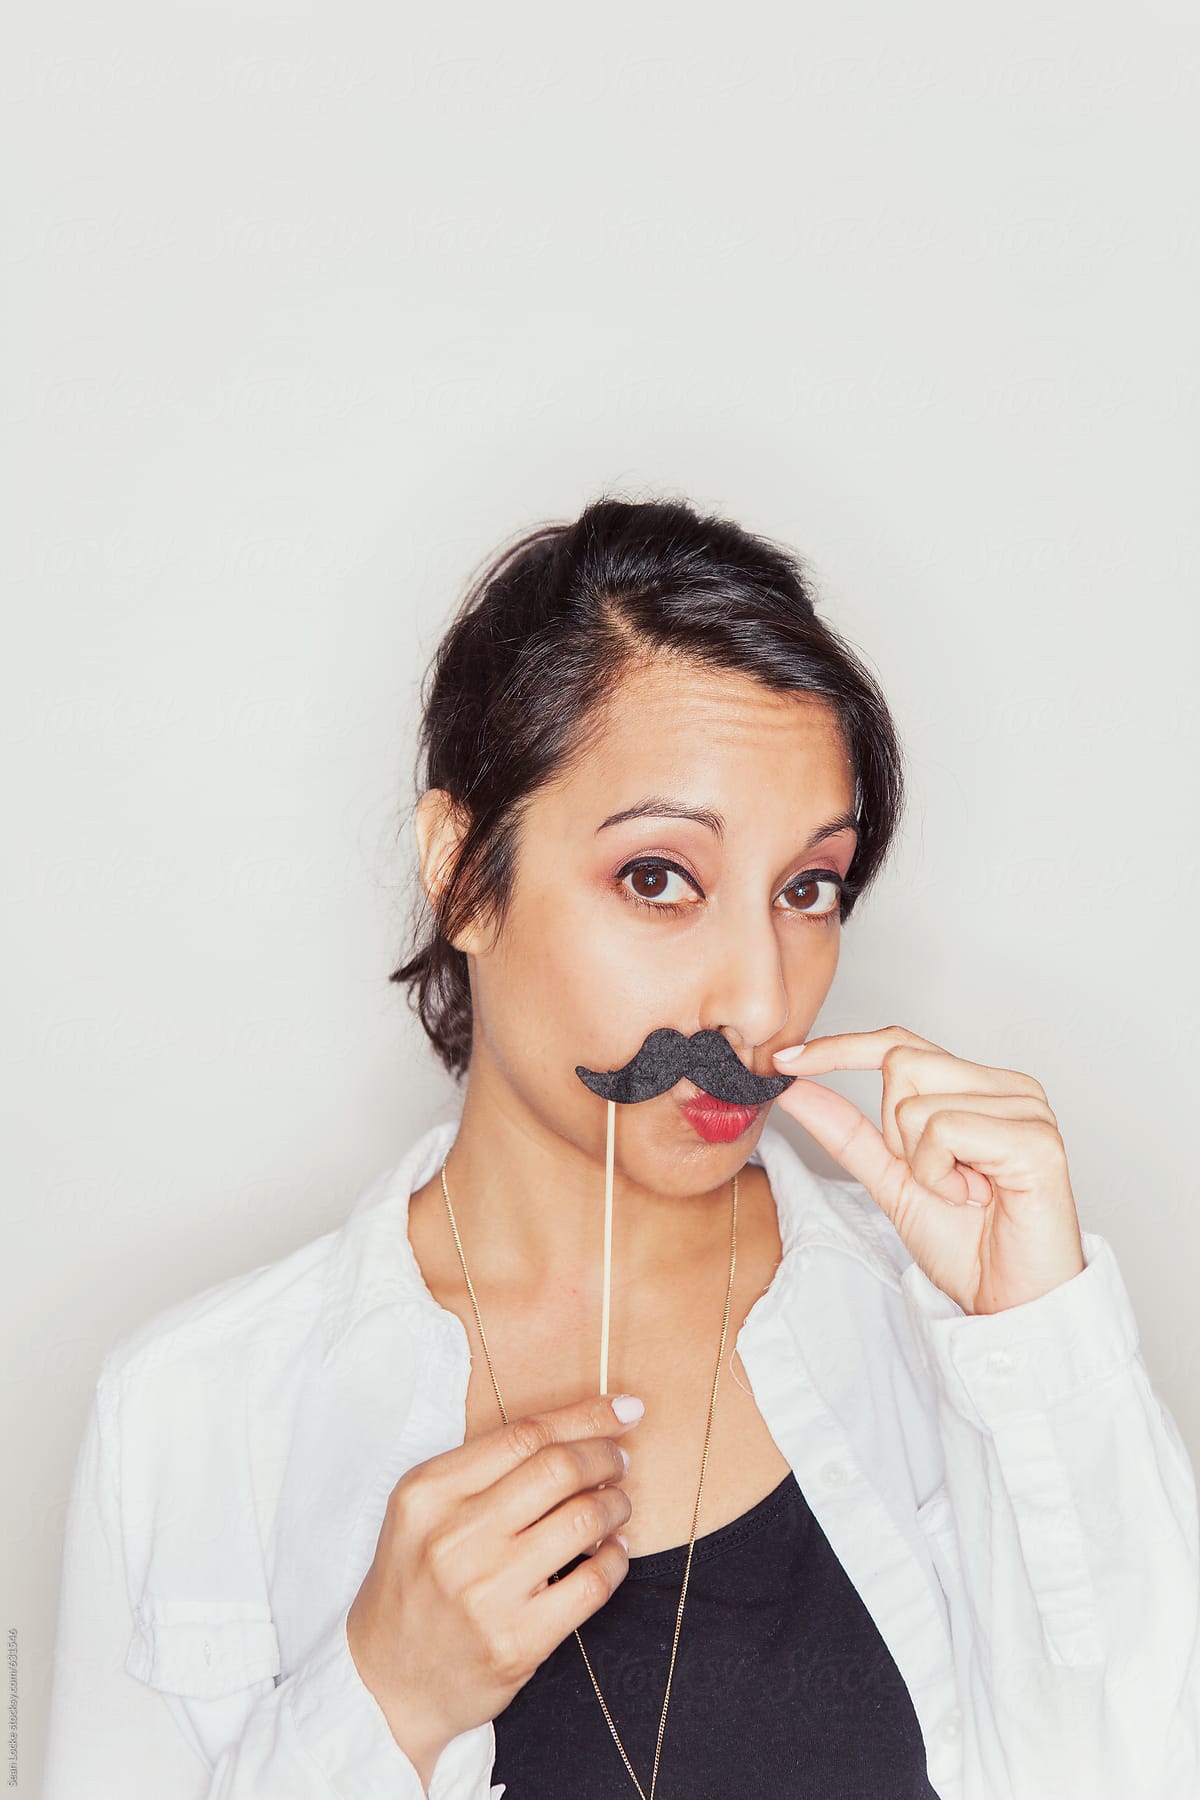 Portraits: Woman With Moustache On A Stick